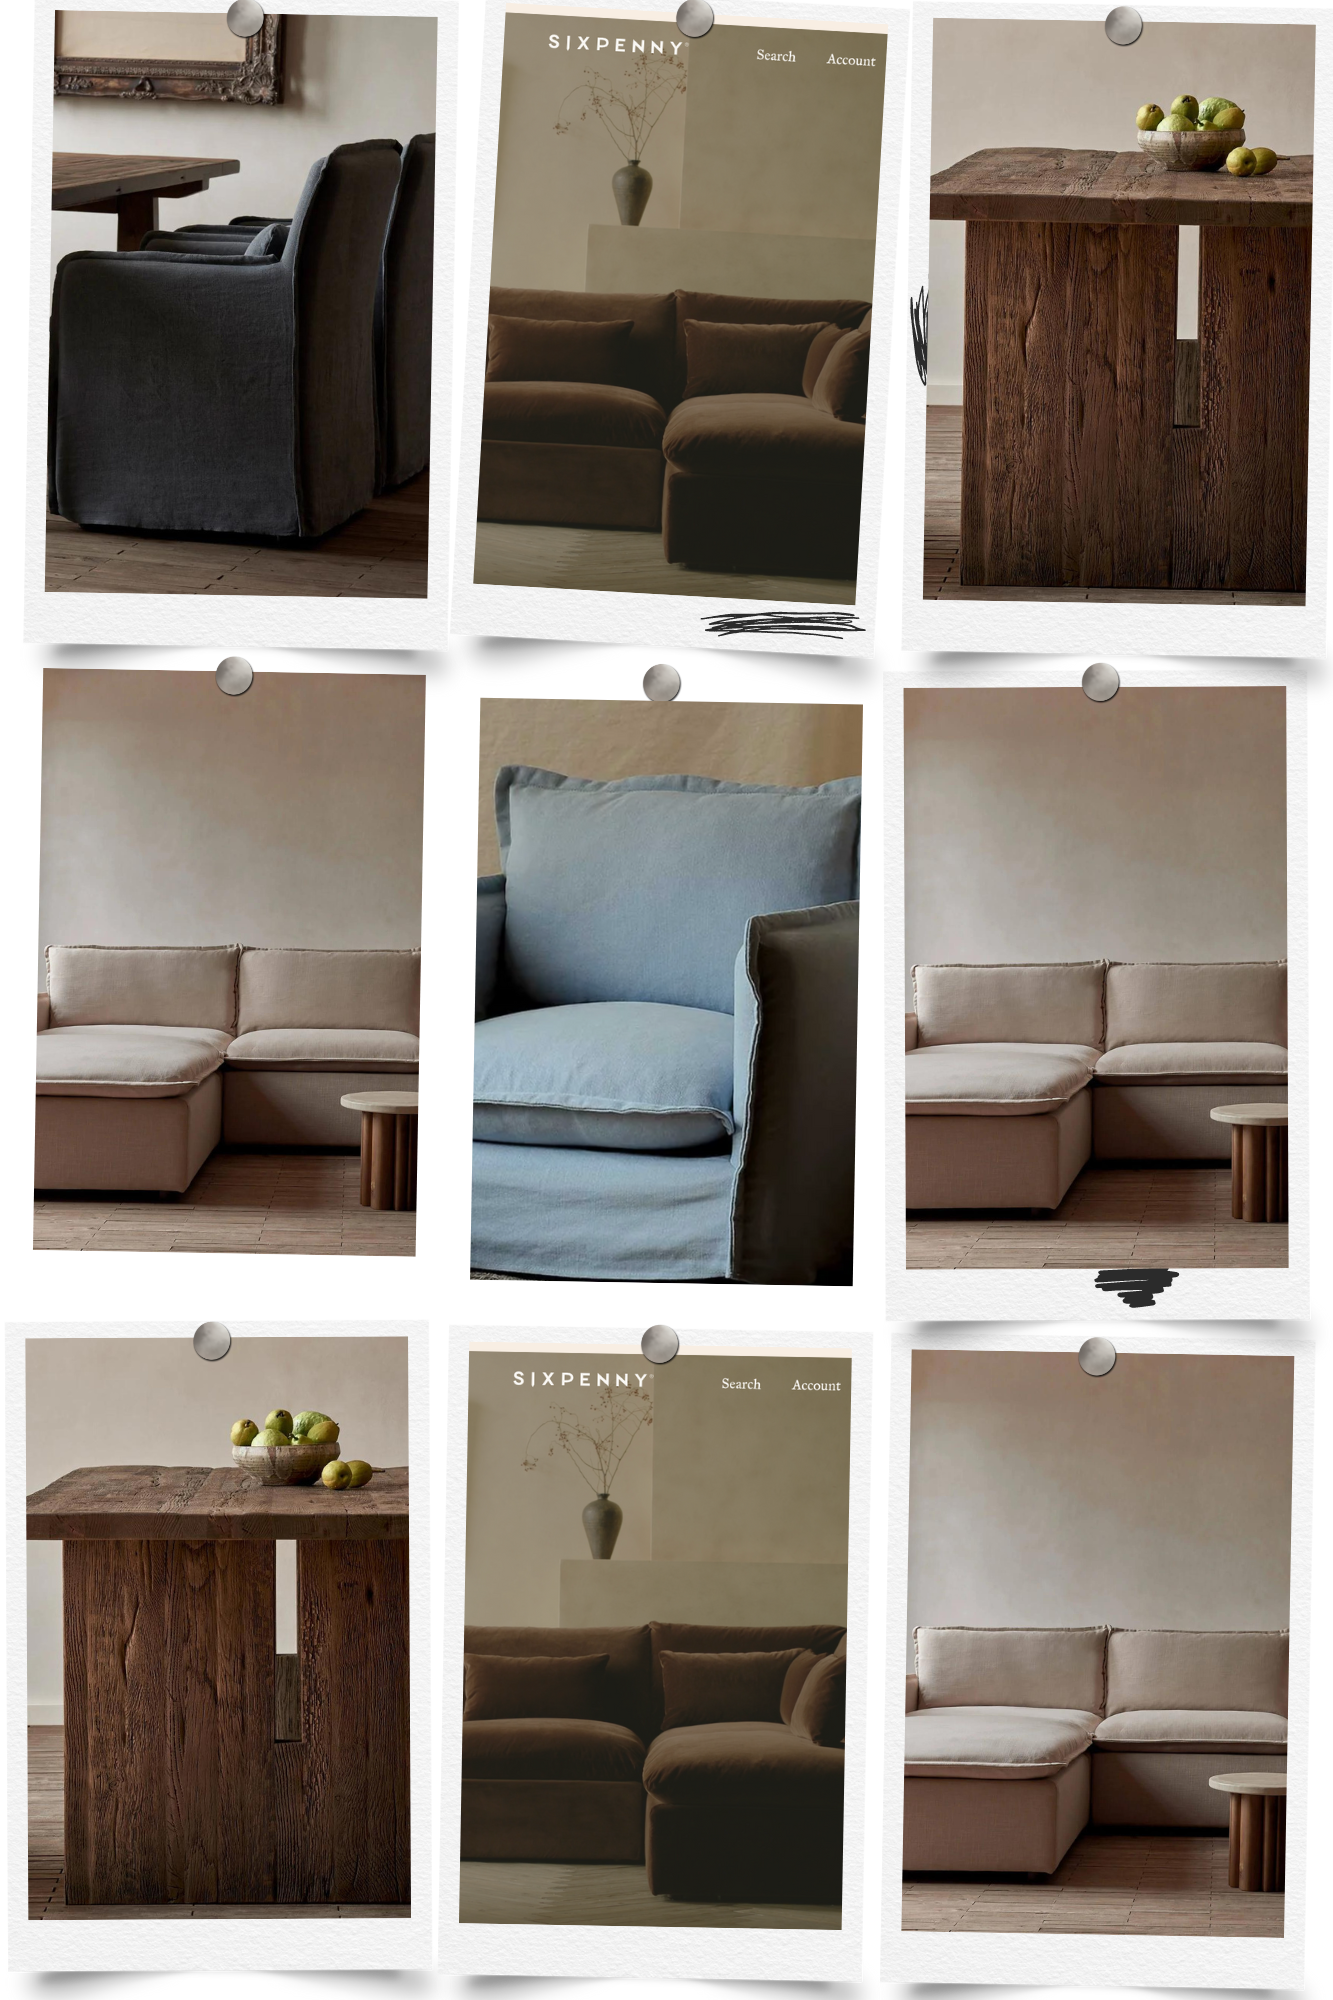 Sixpenny sofas, highlighting various elegant and comfortable designs, showcasing premium linen upholstery, cozy home decor, and stylish living room setups